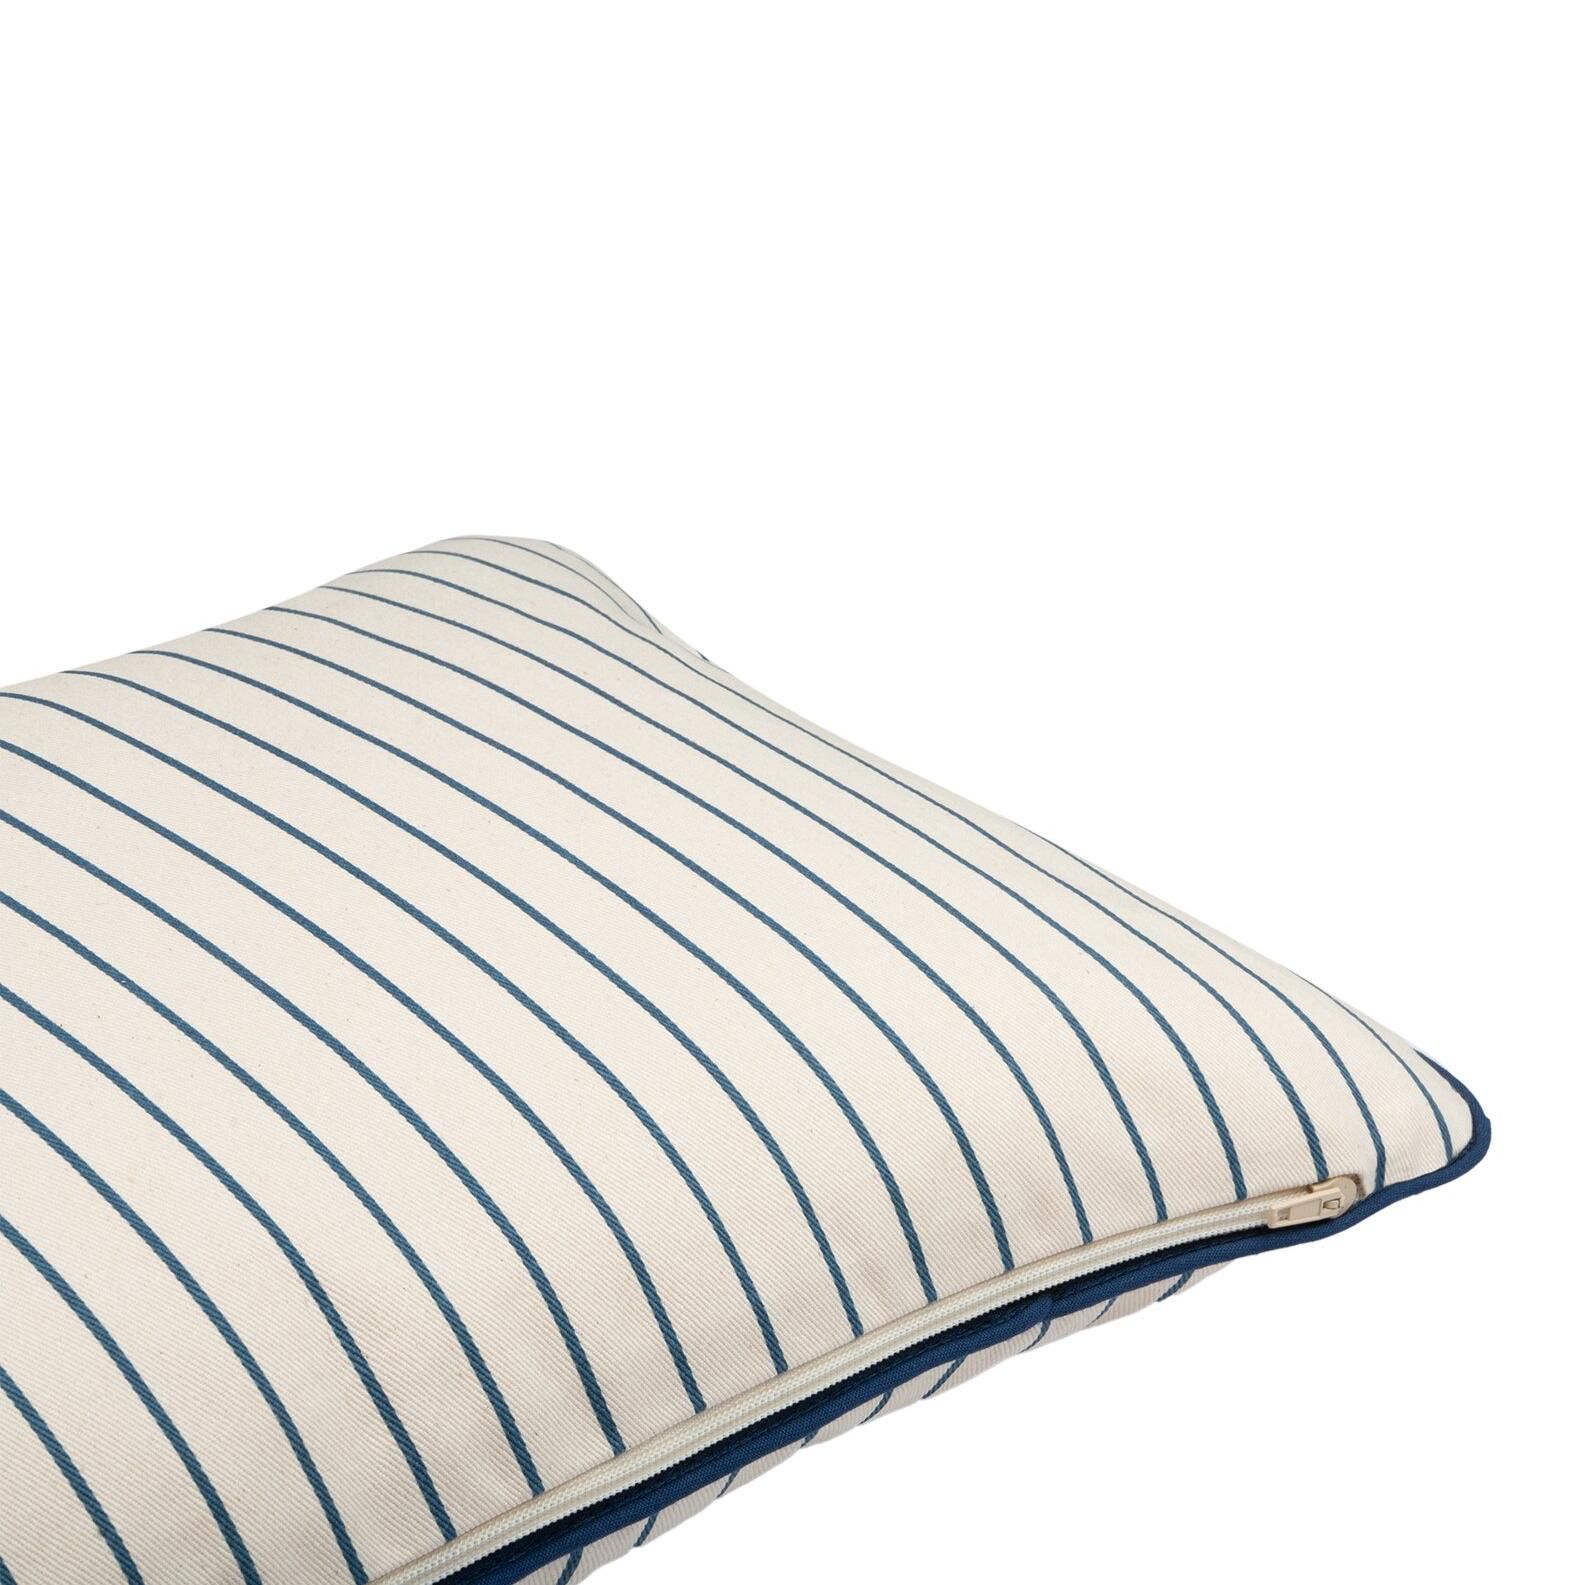 Подушка Nobodinoz "Jazz Cushion Blue Thin Stripes/Natural", тонкая синяя полоска, 45 х 30 см